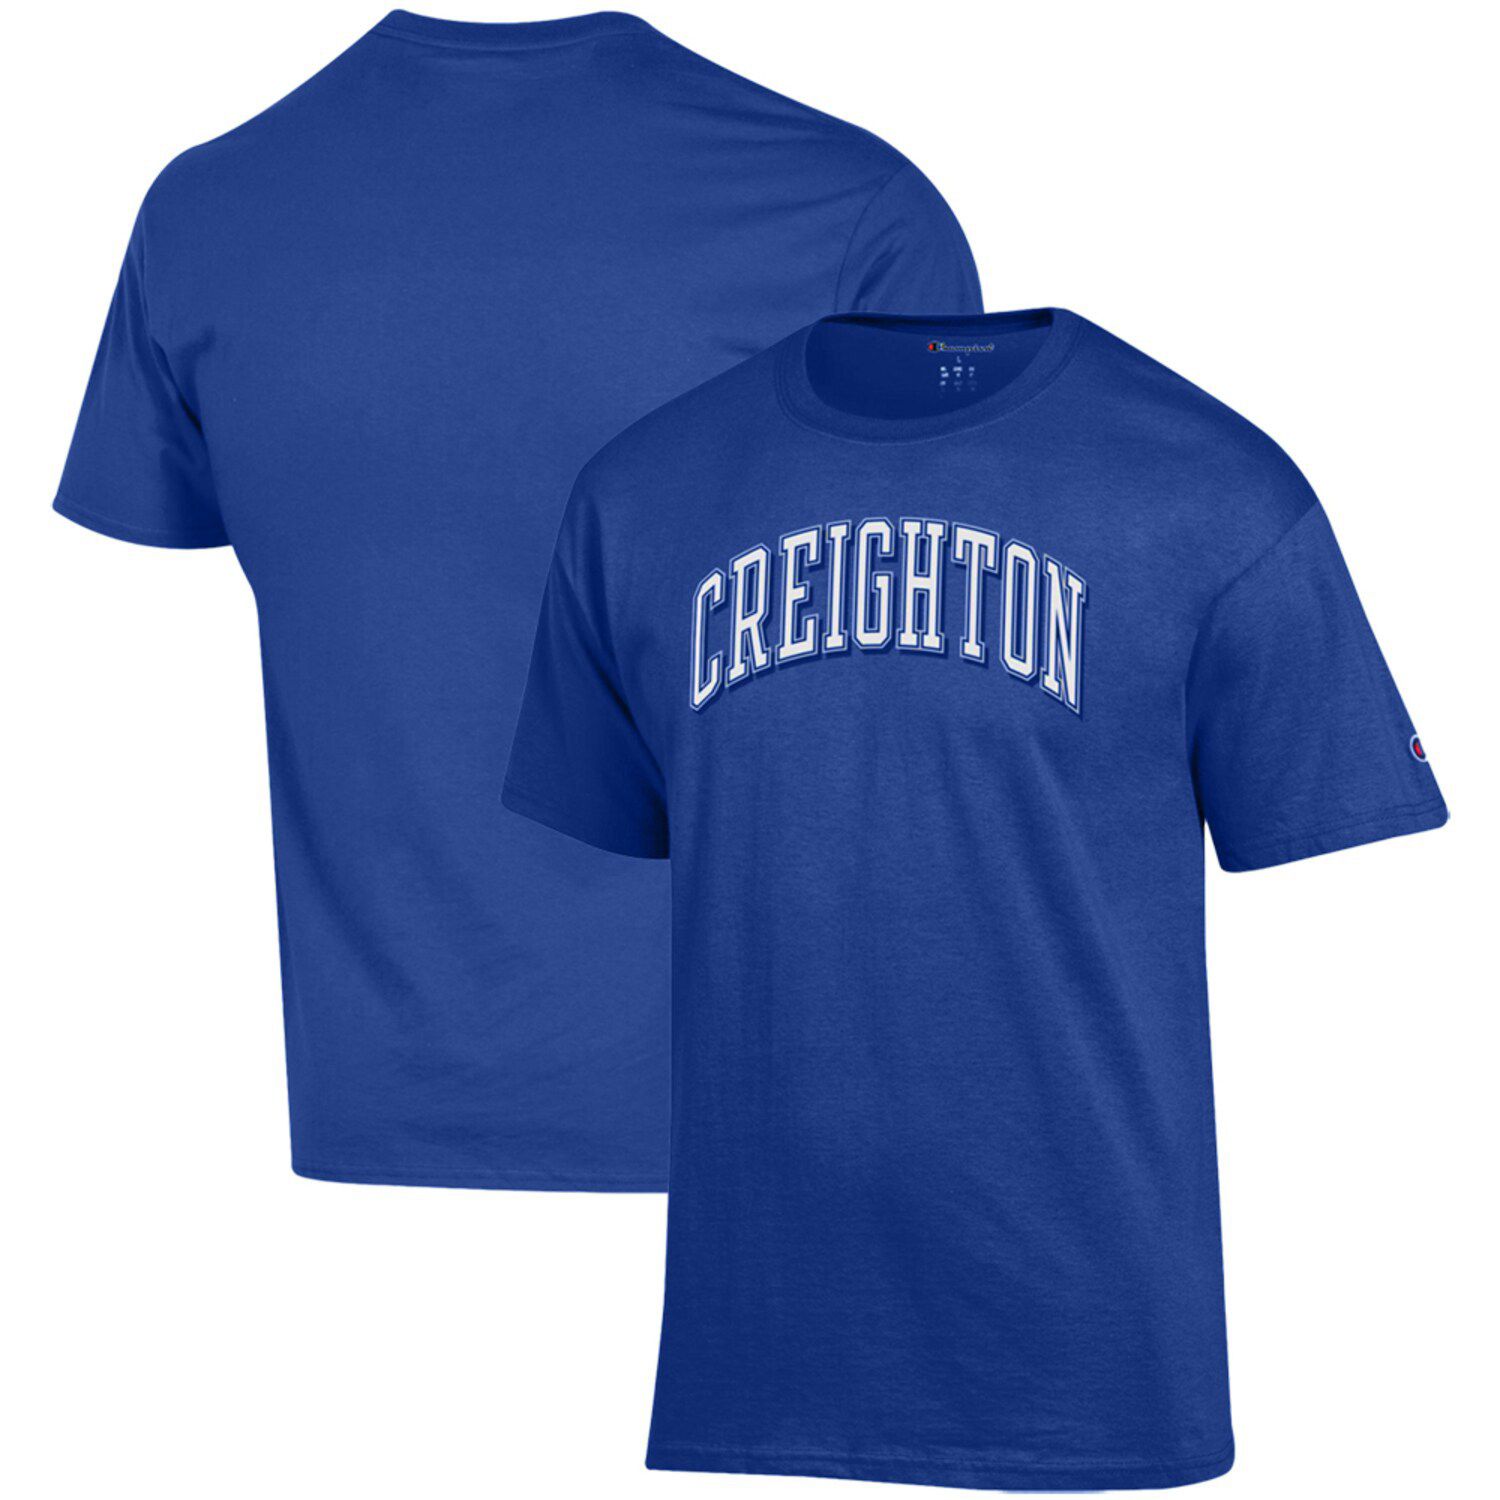 creighton t shirt